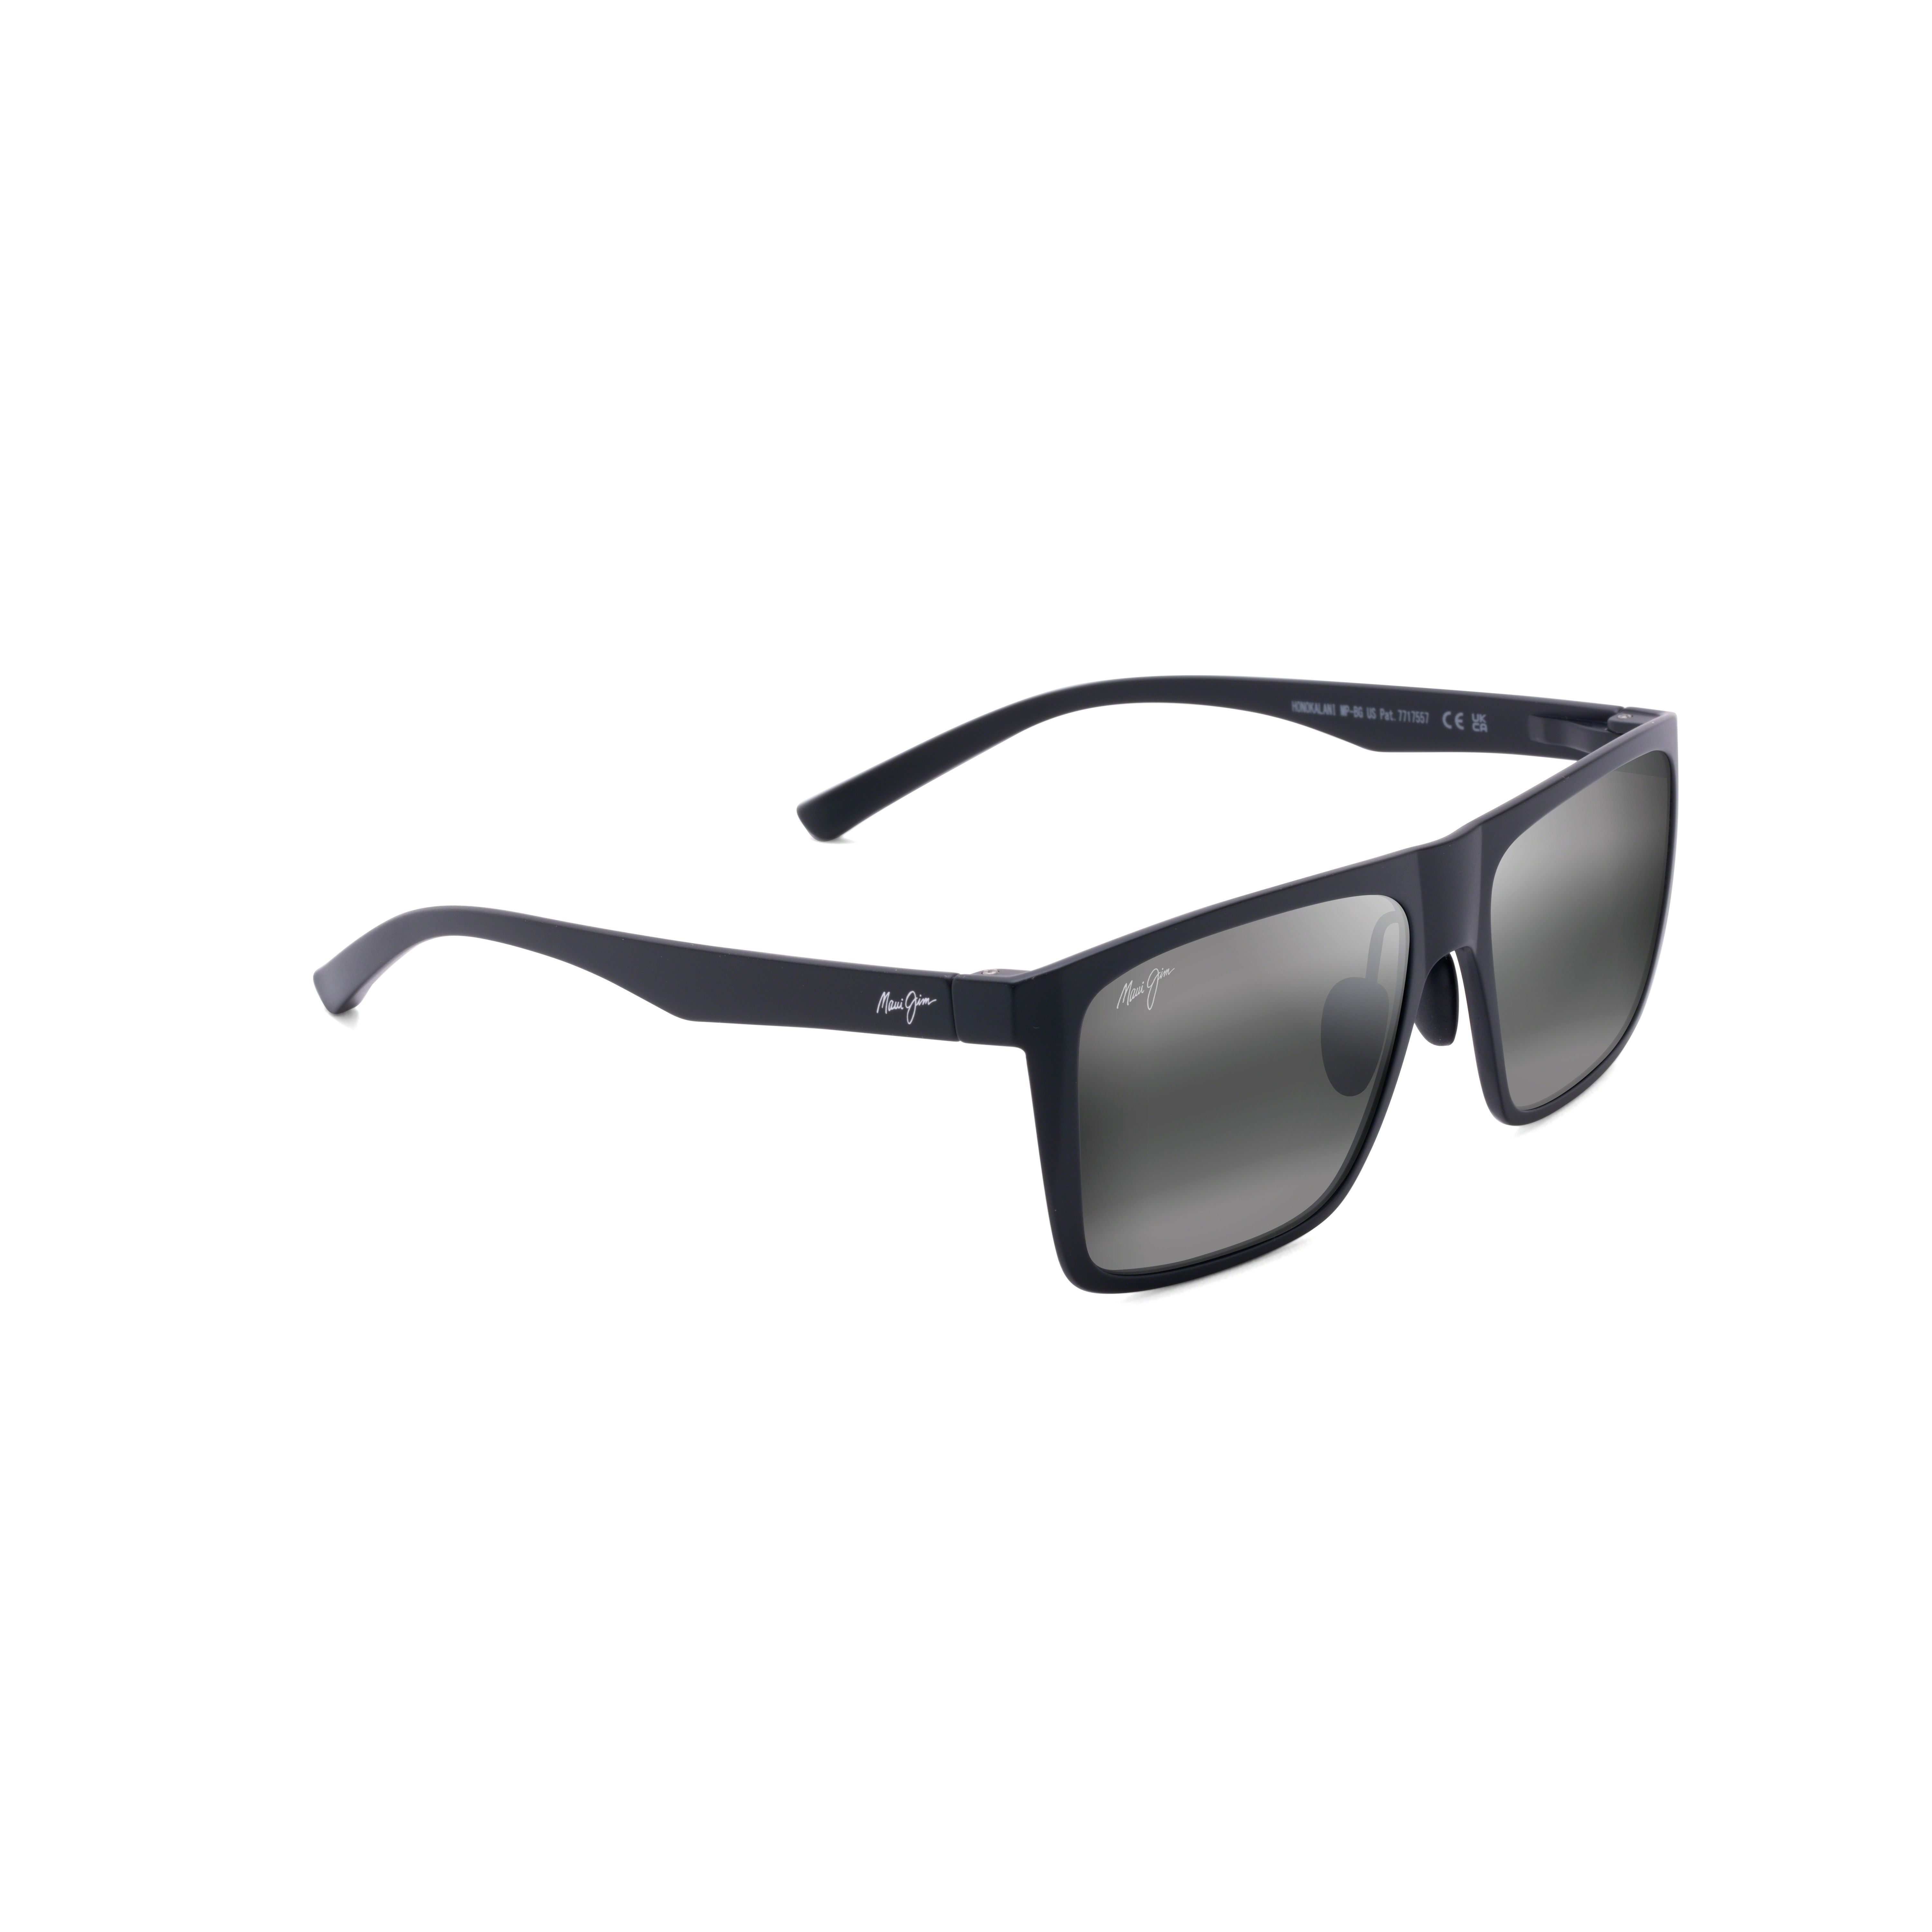 HONOKALANI Square Sunglasses 02 - size 57